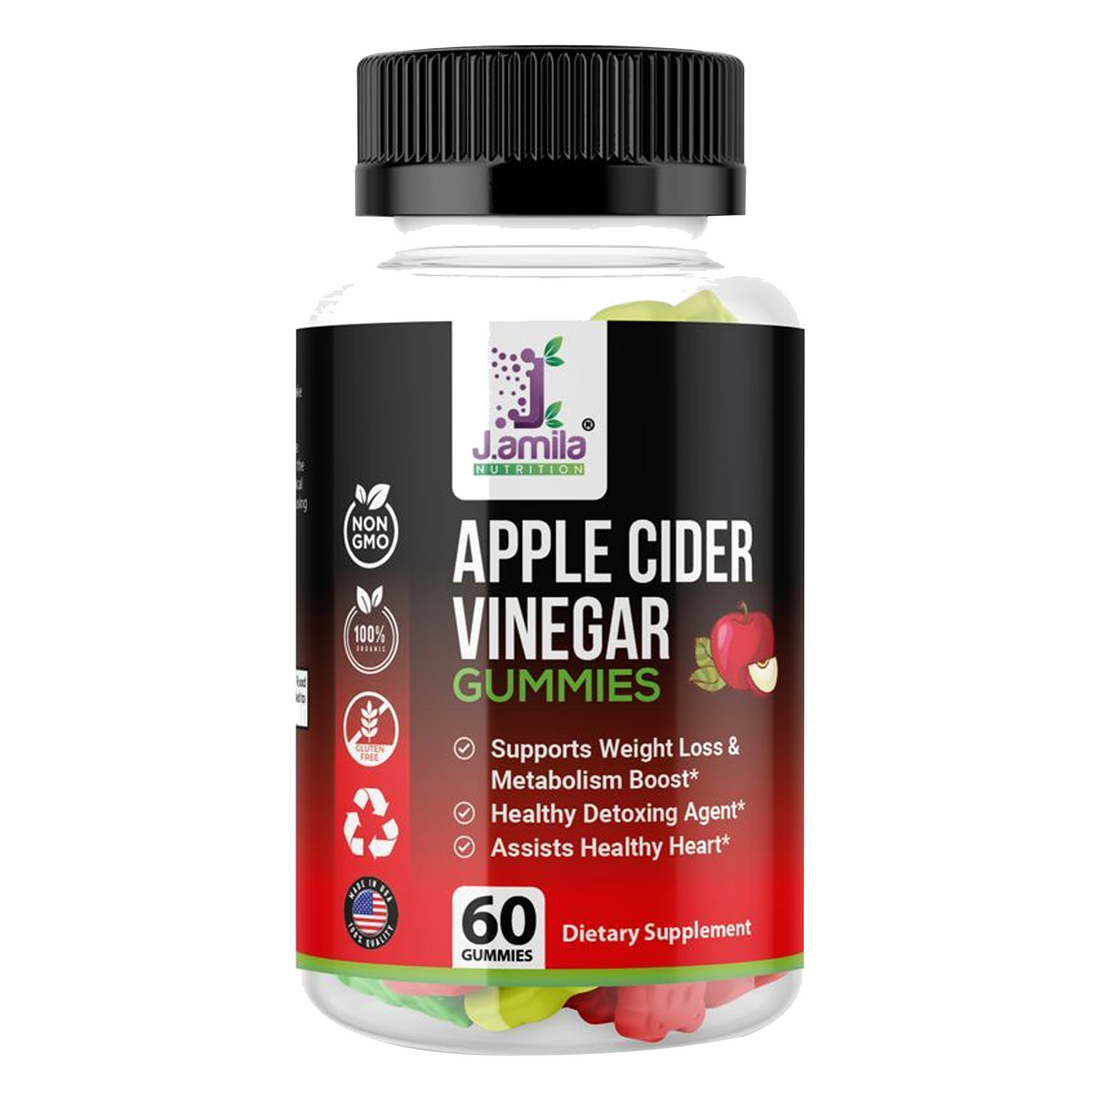 J. AMILA Apple Cider Vinegar Gummies (60ct)